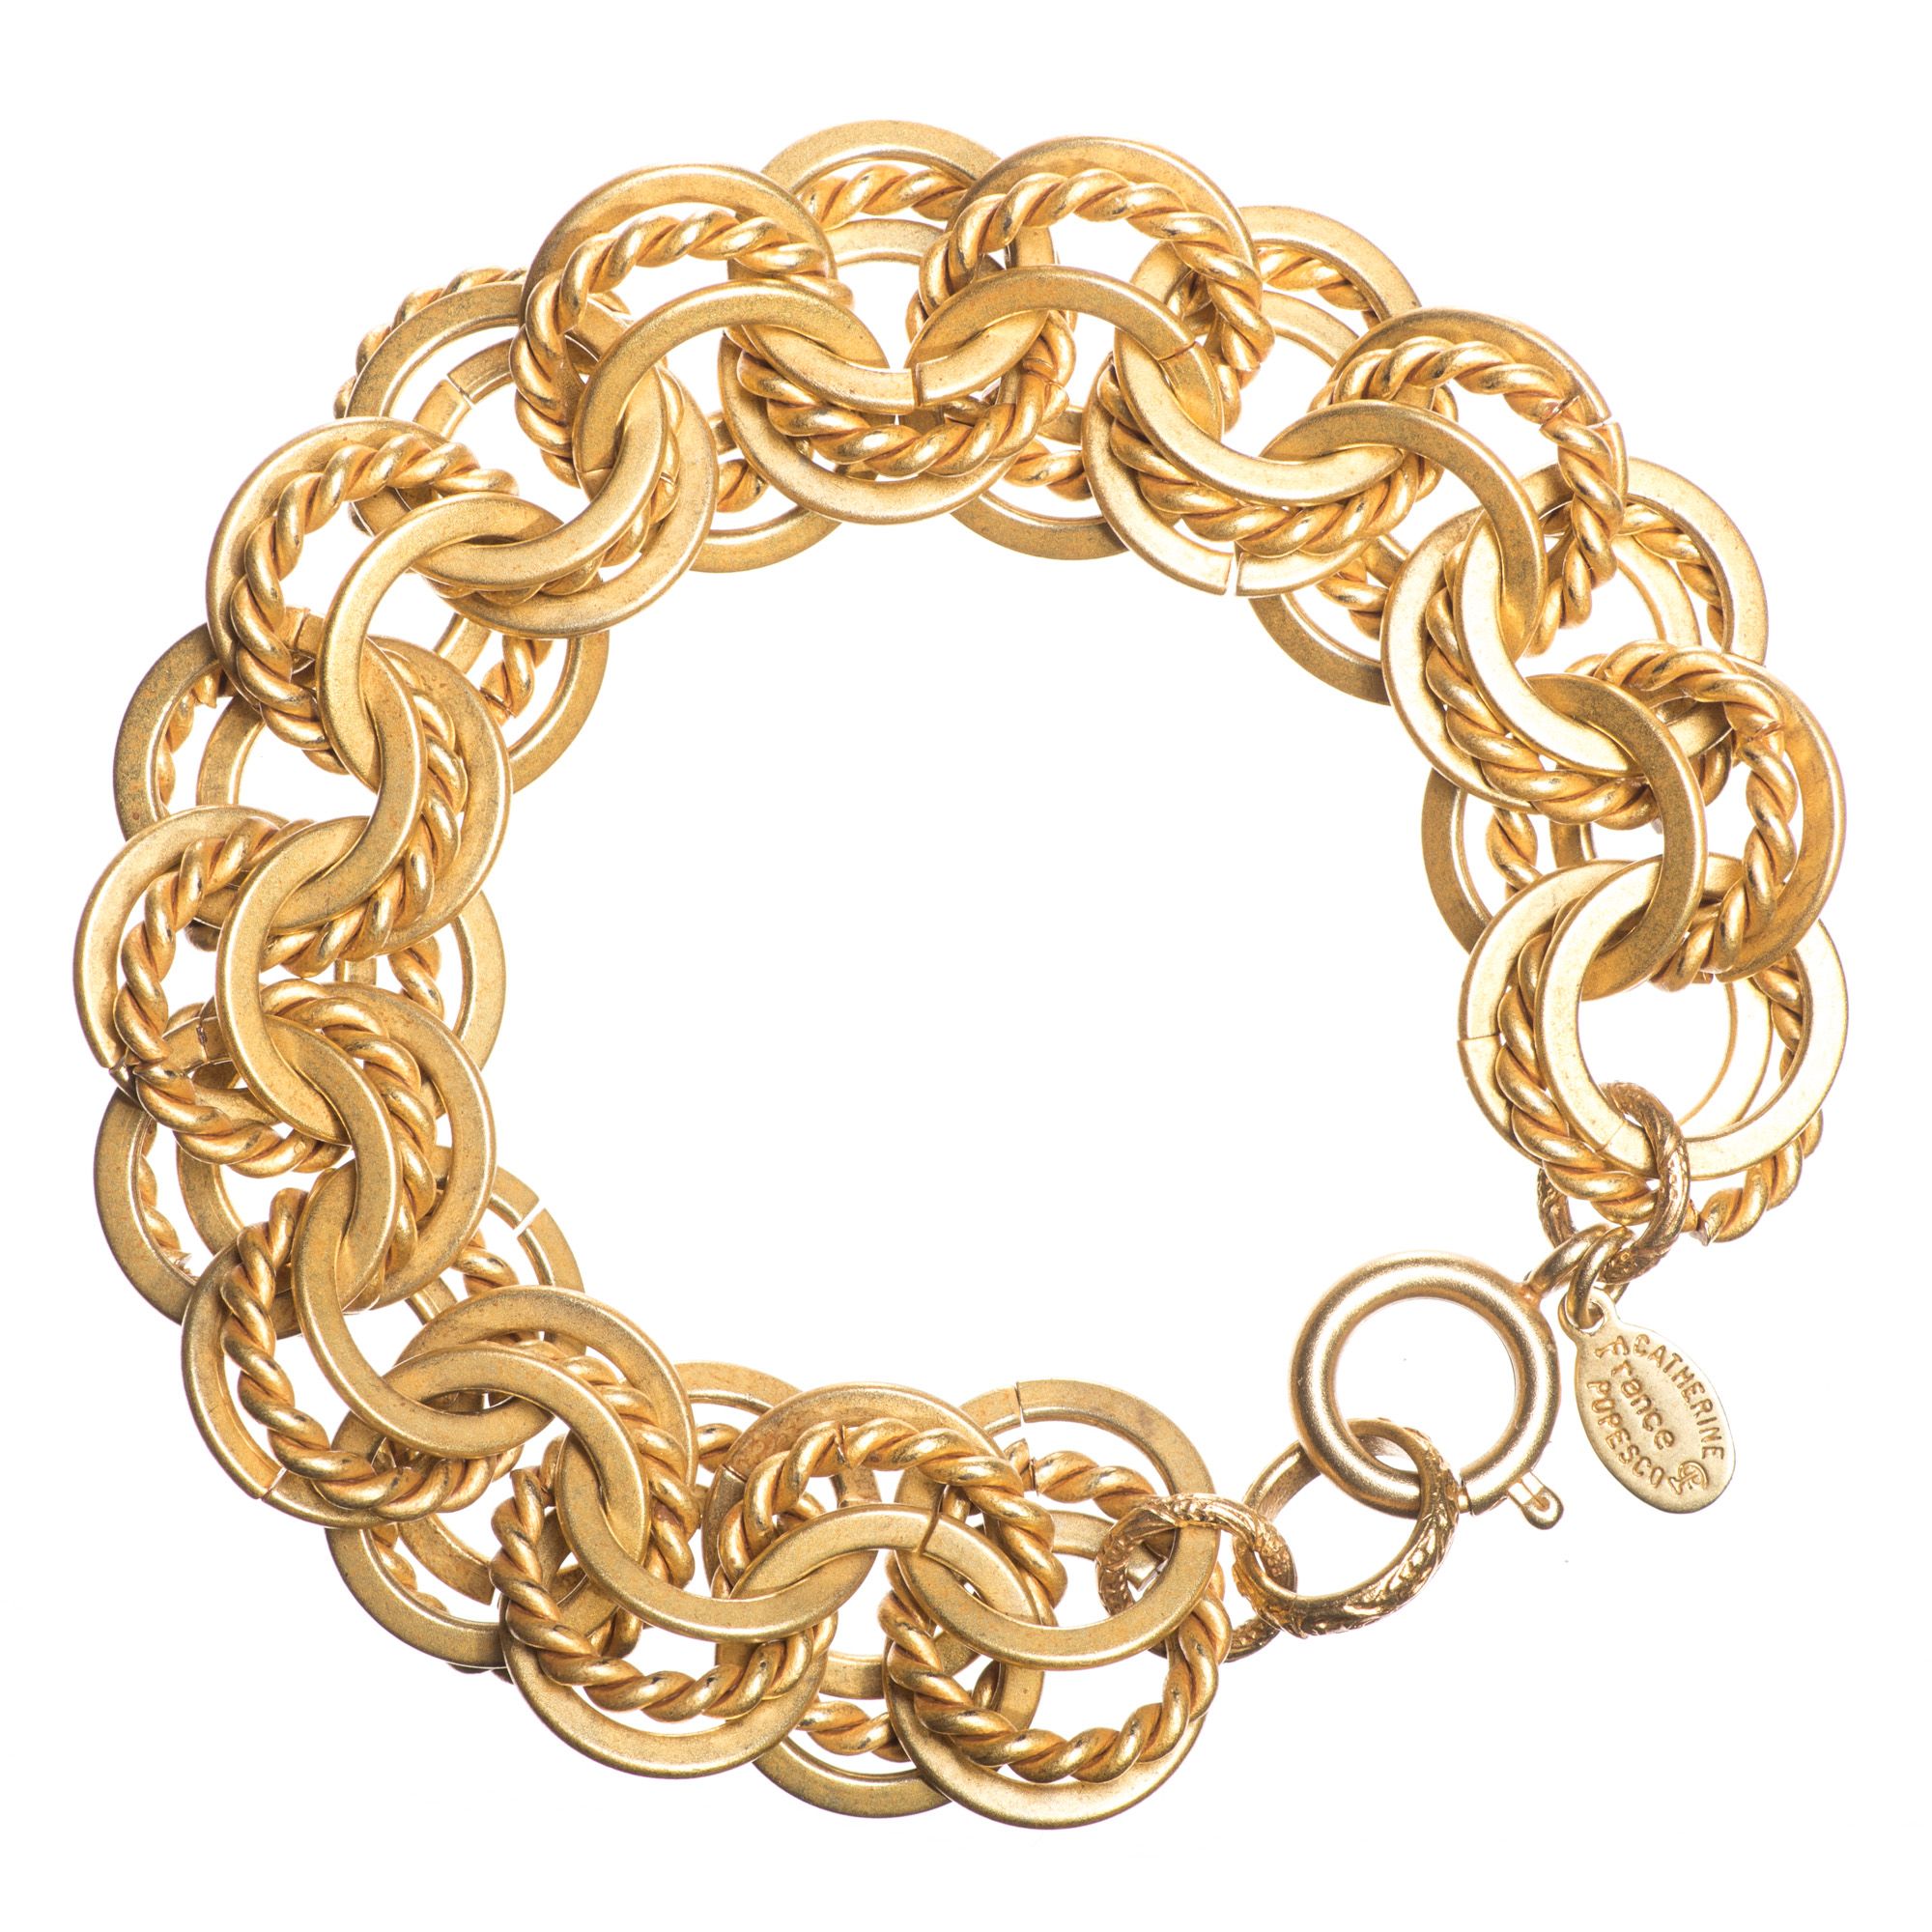 Catherine Popesco Gold Heavy Round Link Bracelet